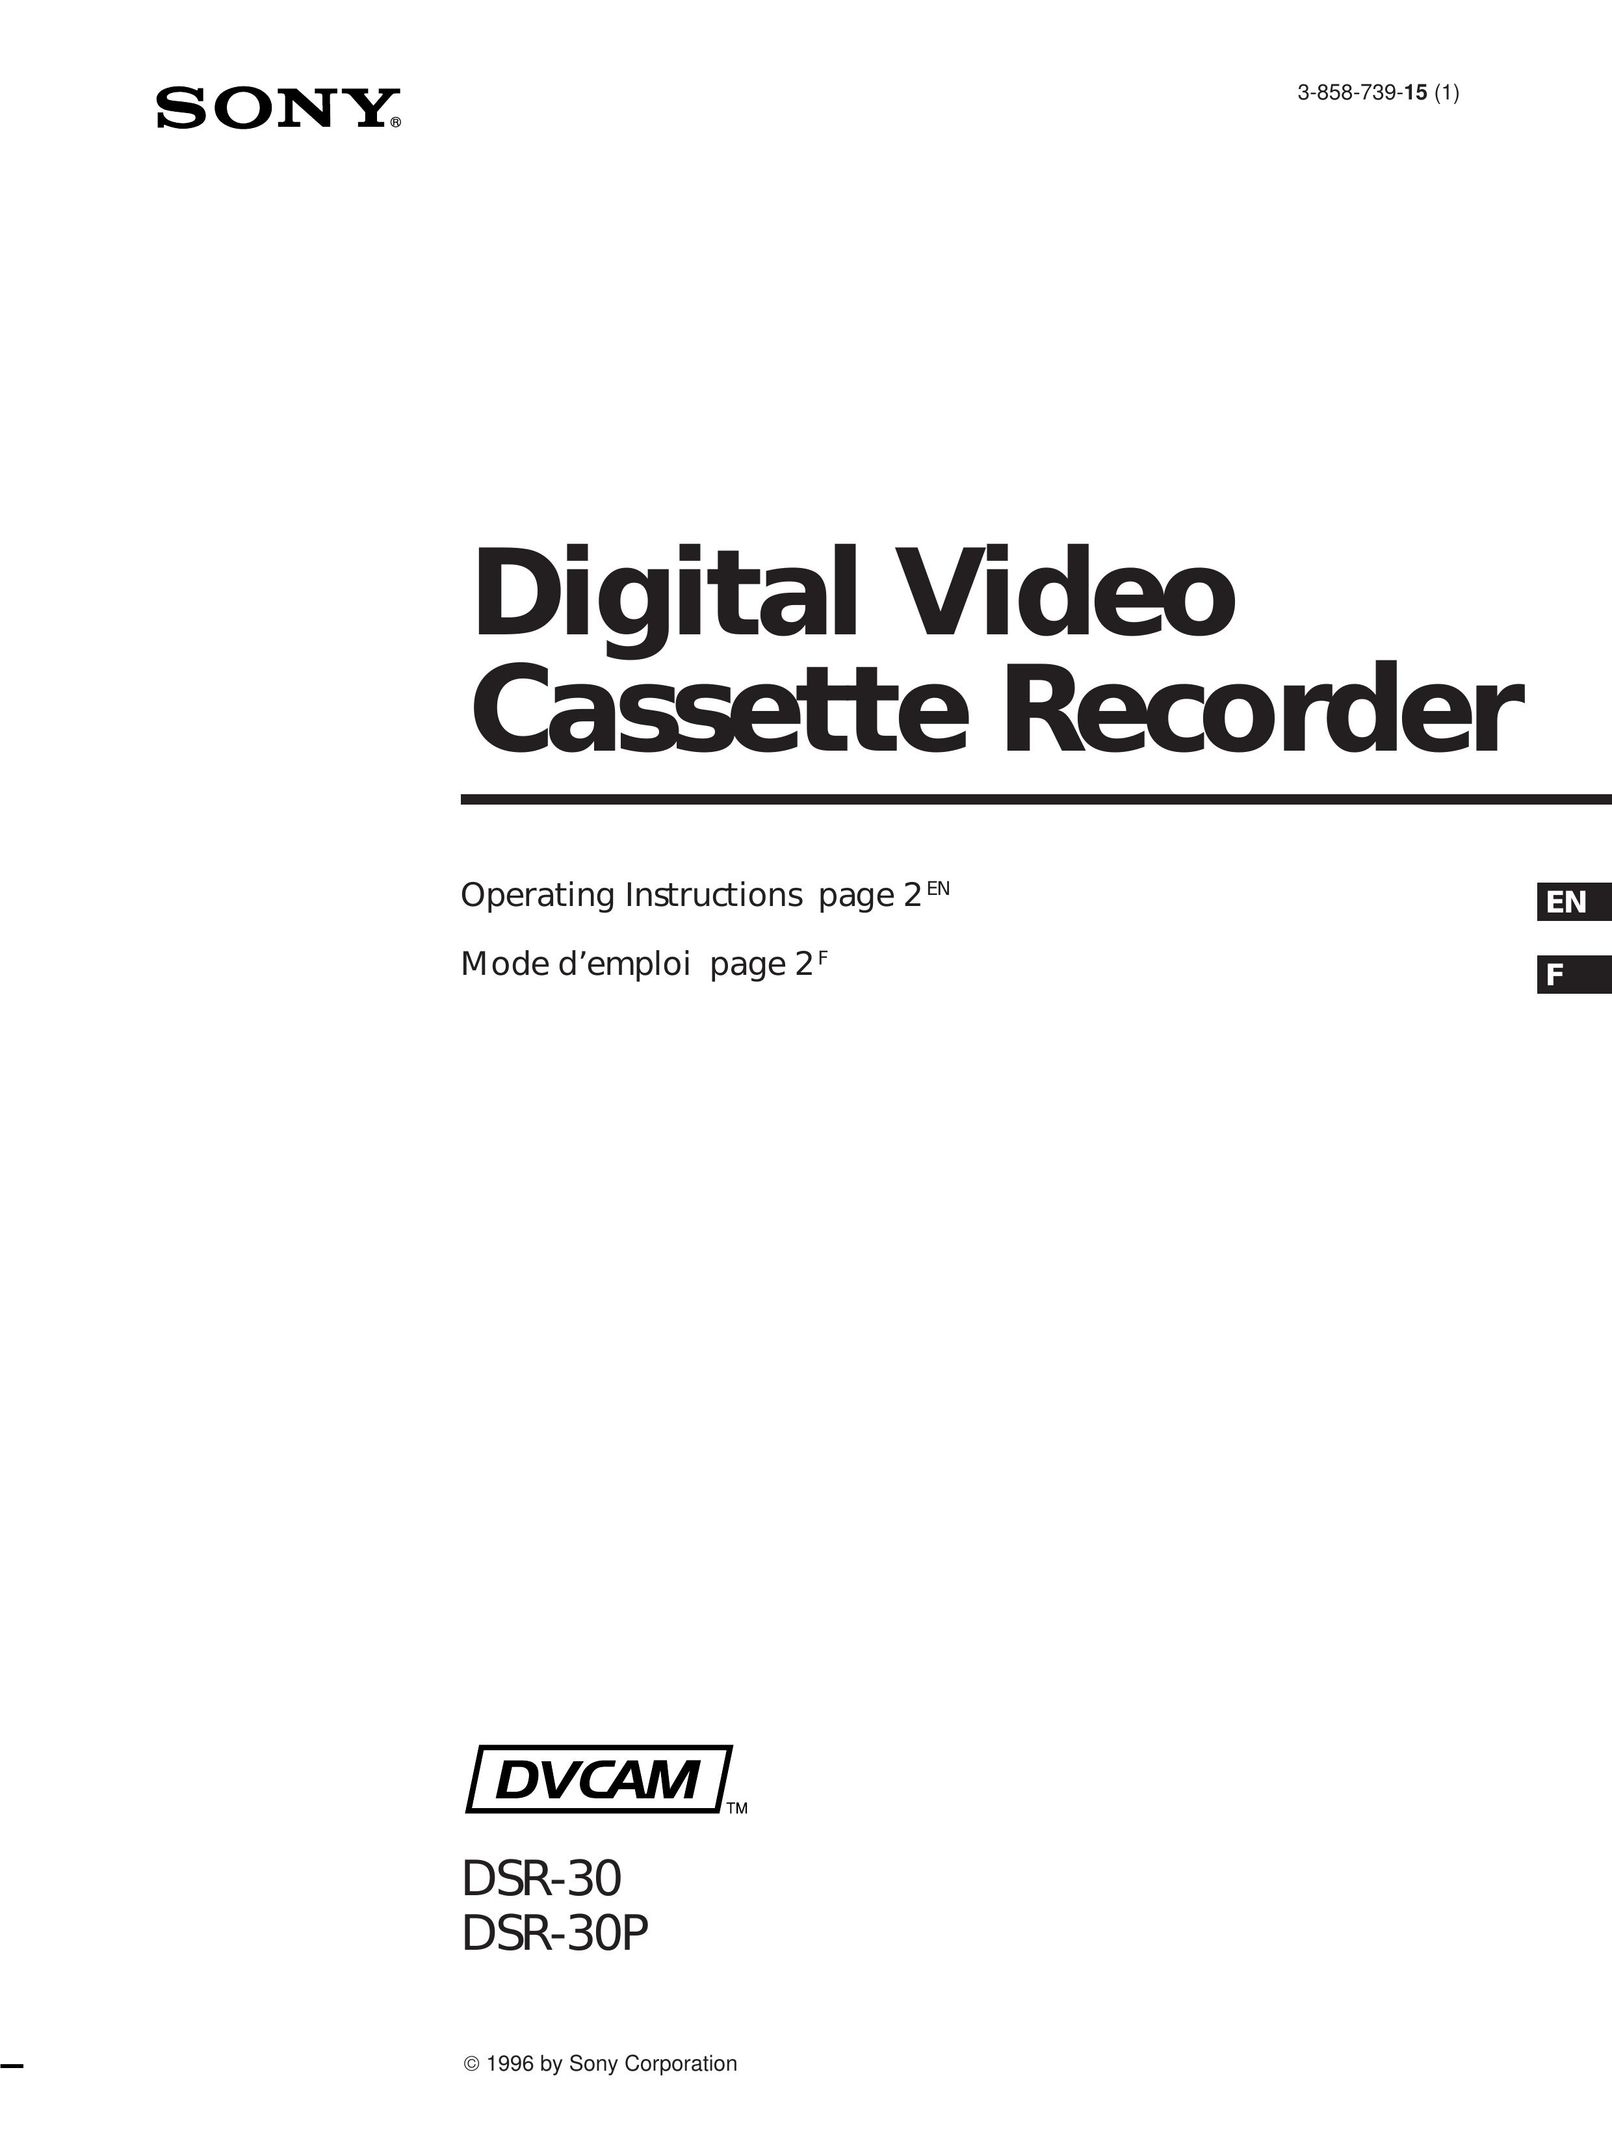 Sony DSR-30P VCR User Manual